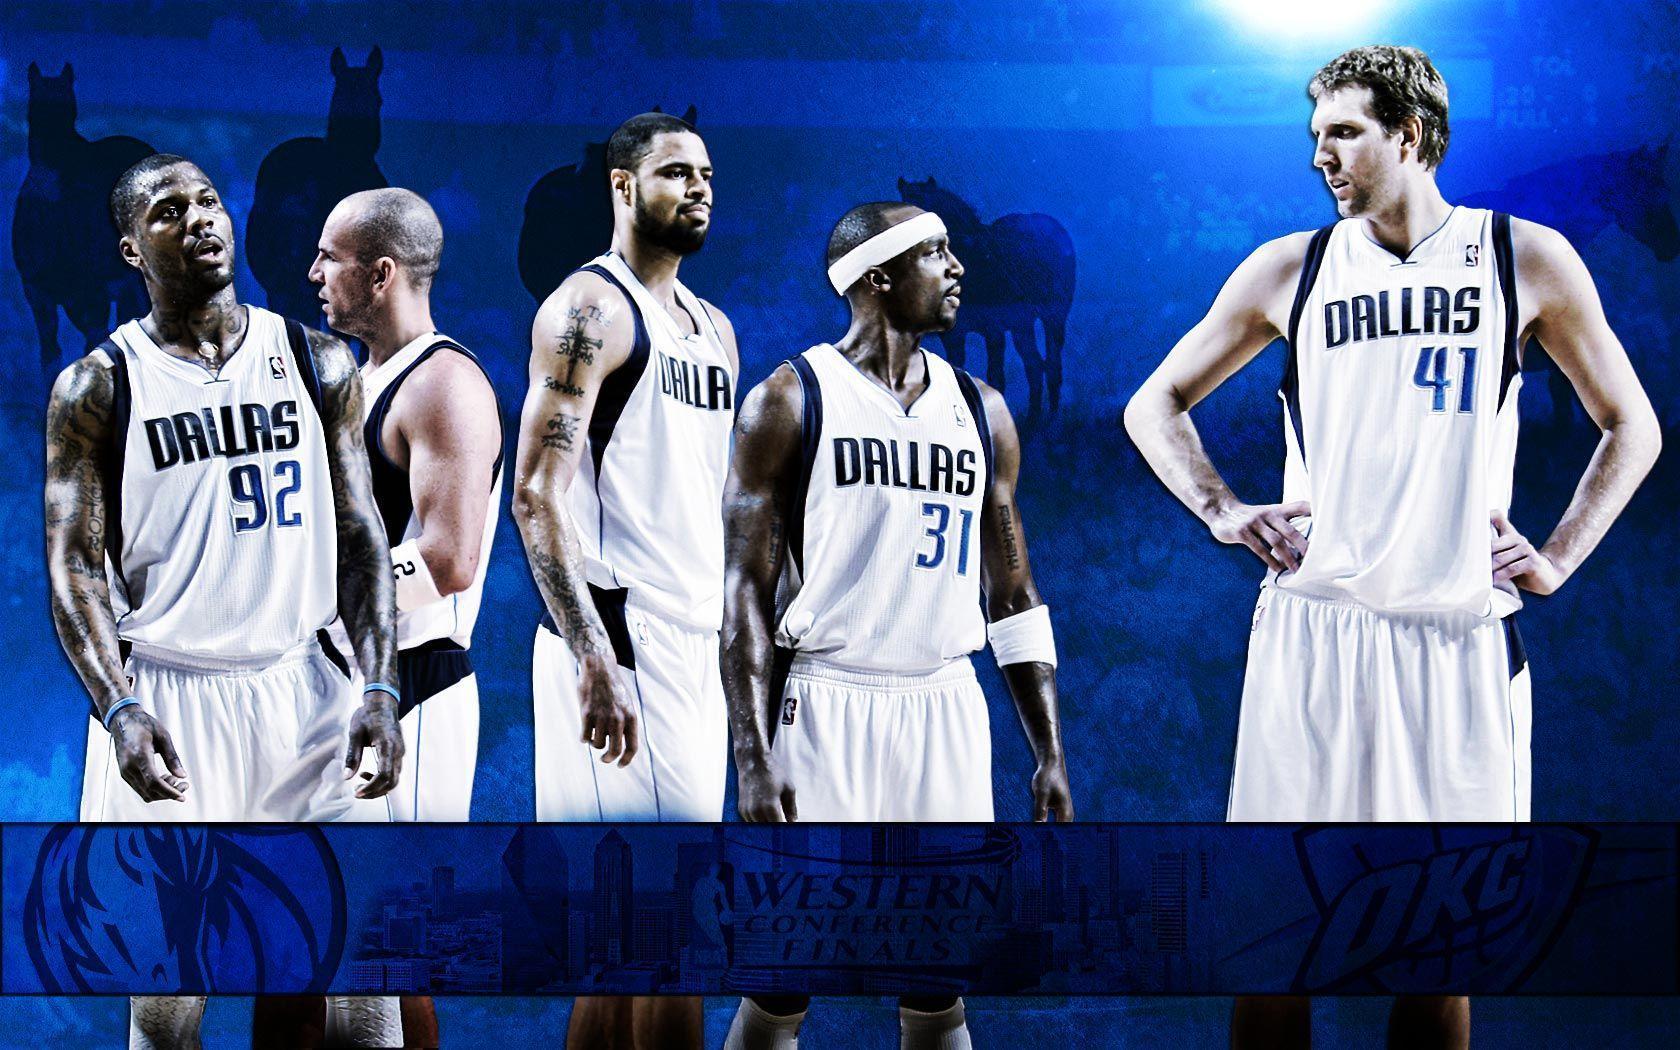 Dallas Mavericks Wallpaper. Basketball Wallpaper at